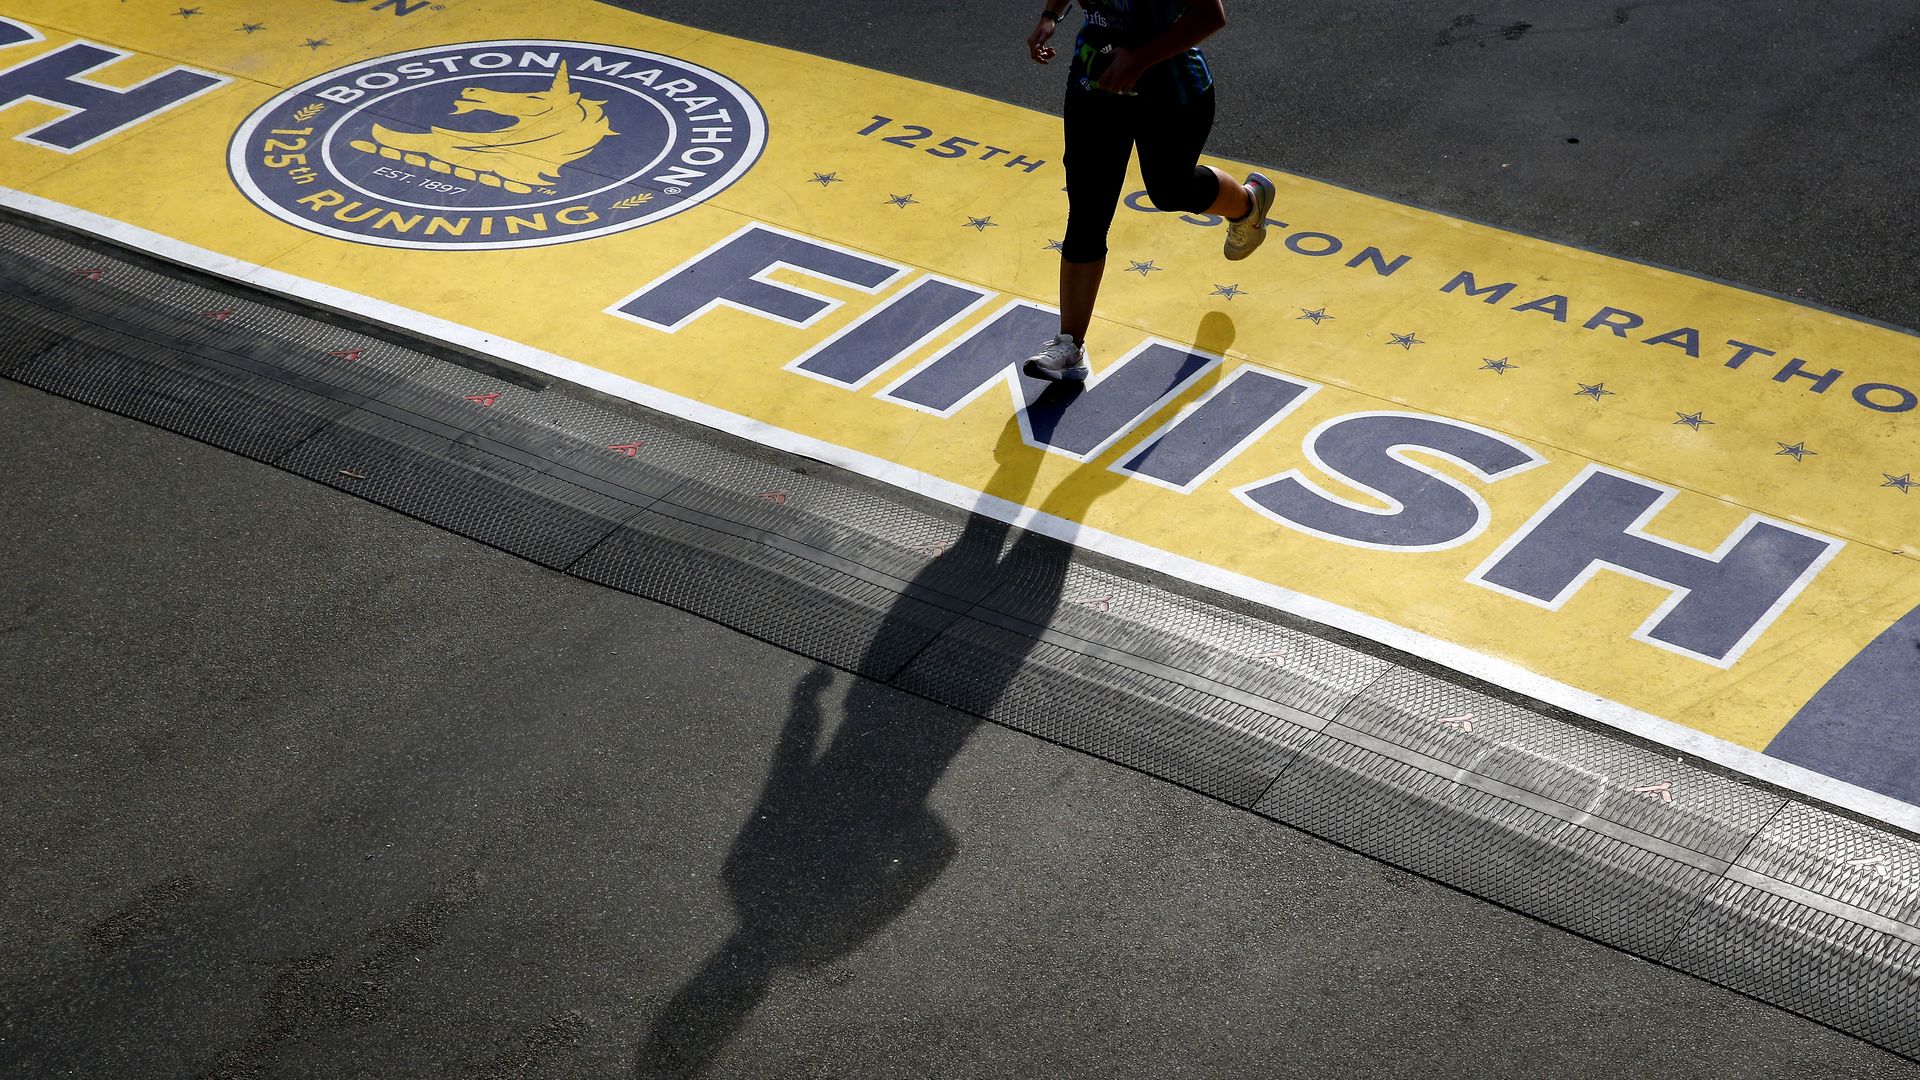 A runner finishing the 125th Boston Marathon